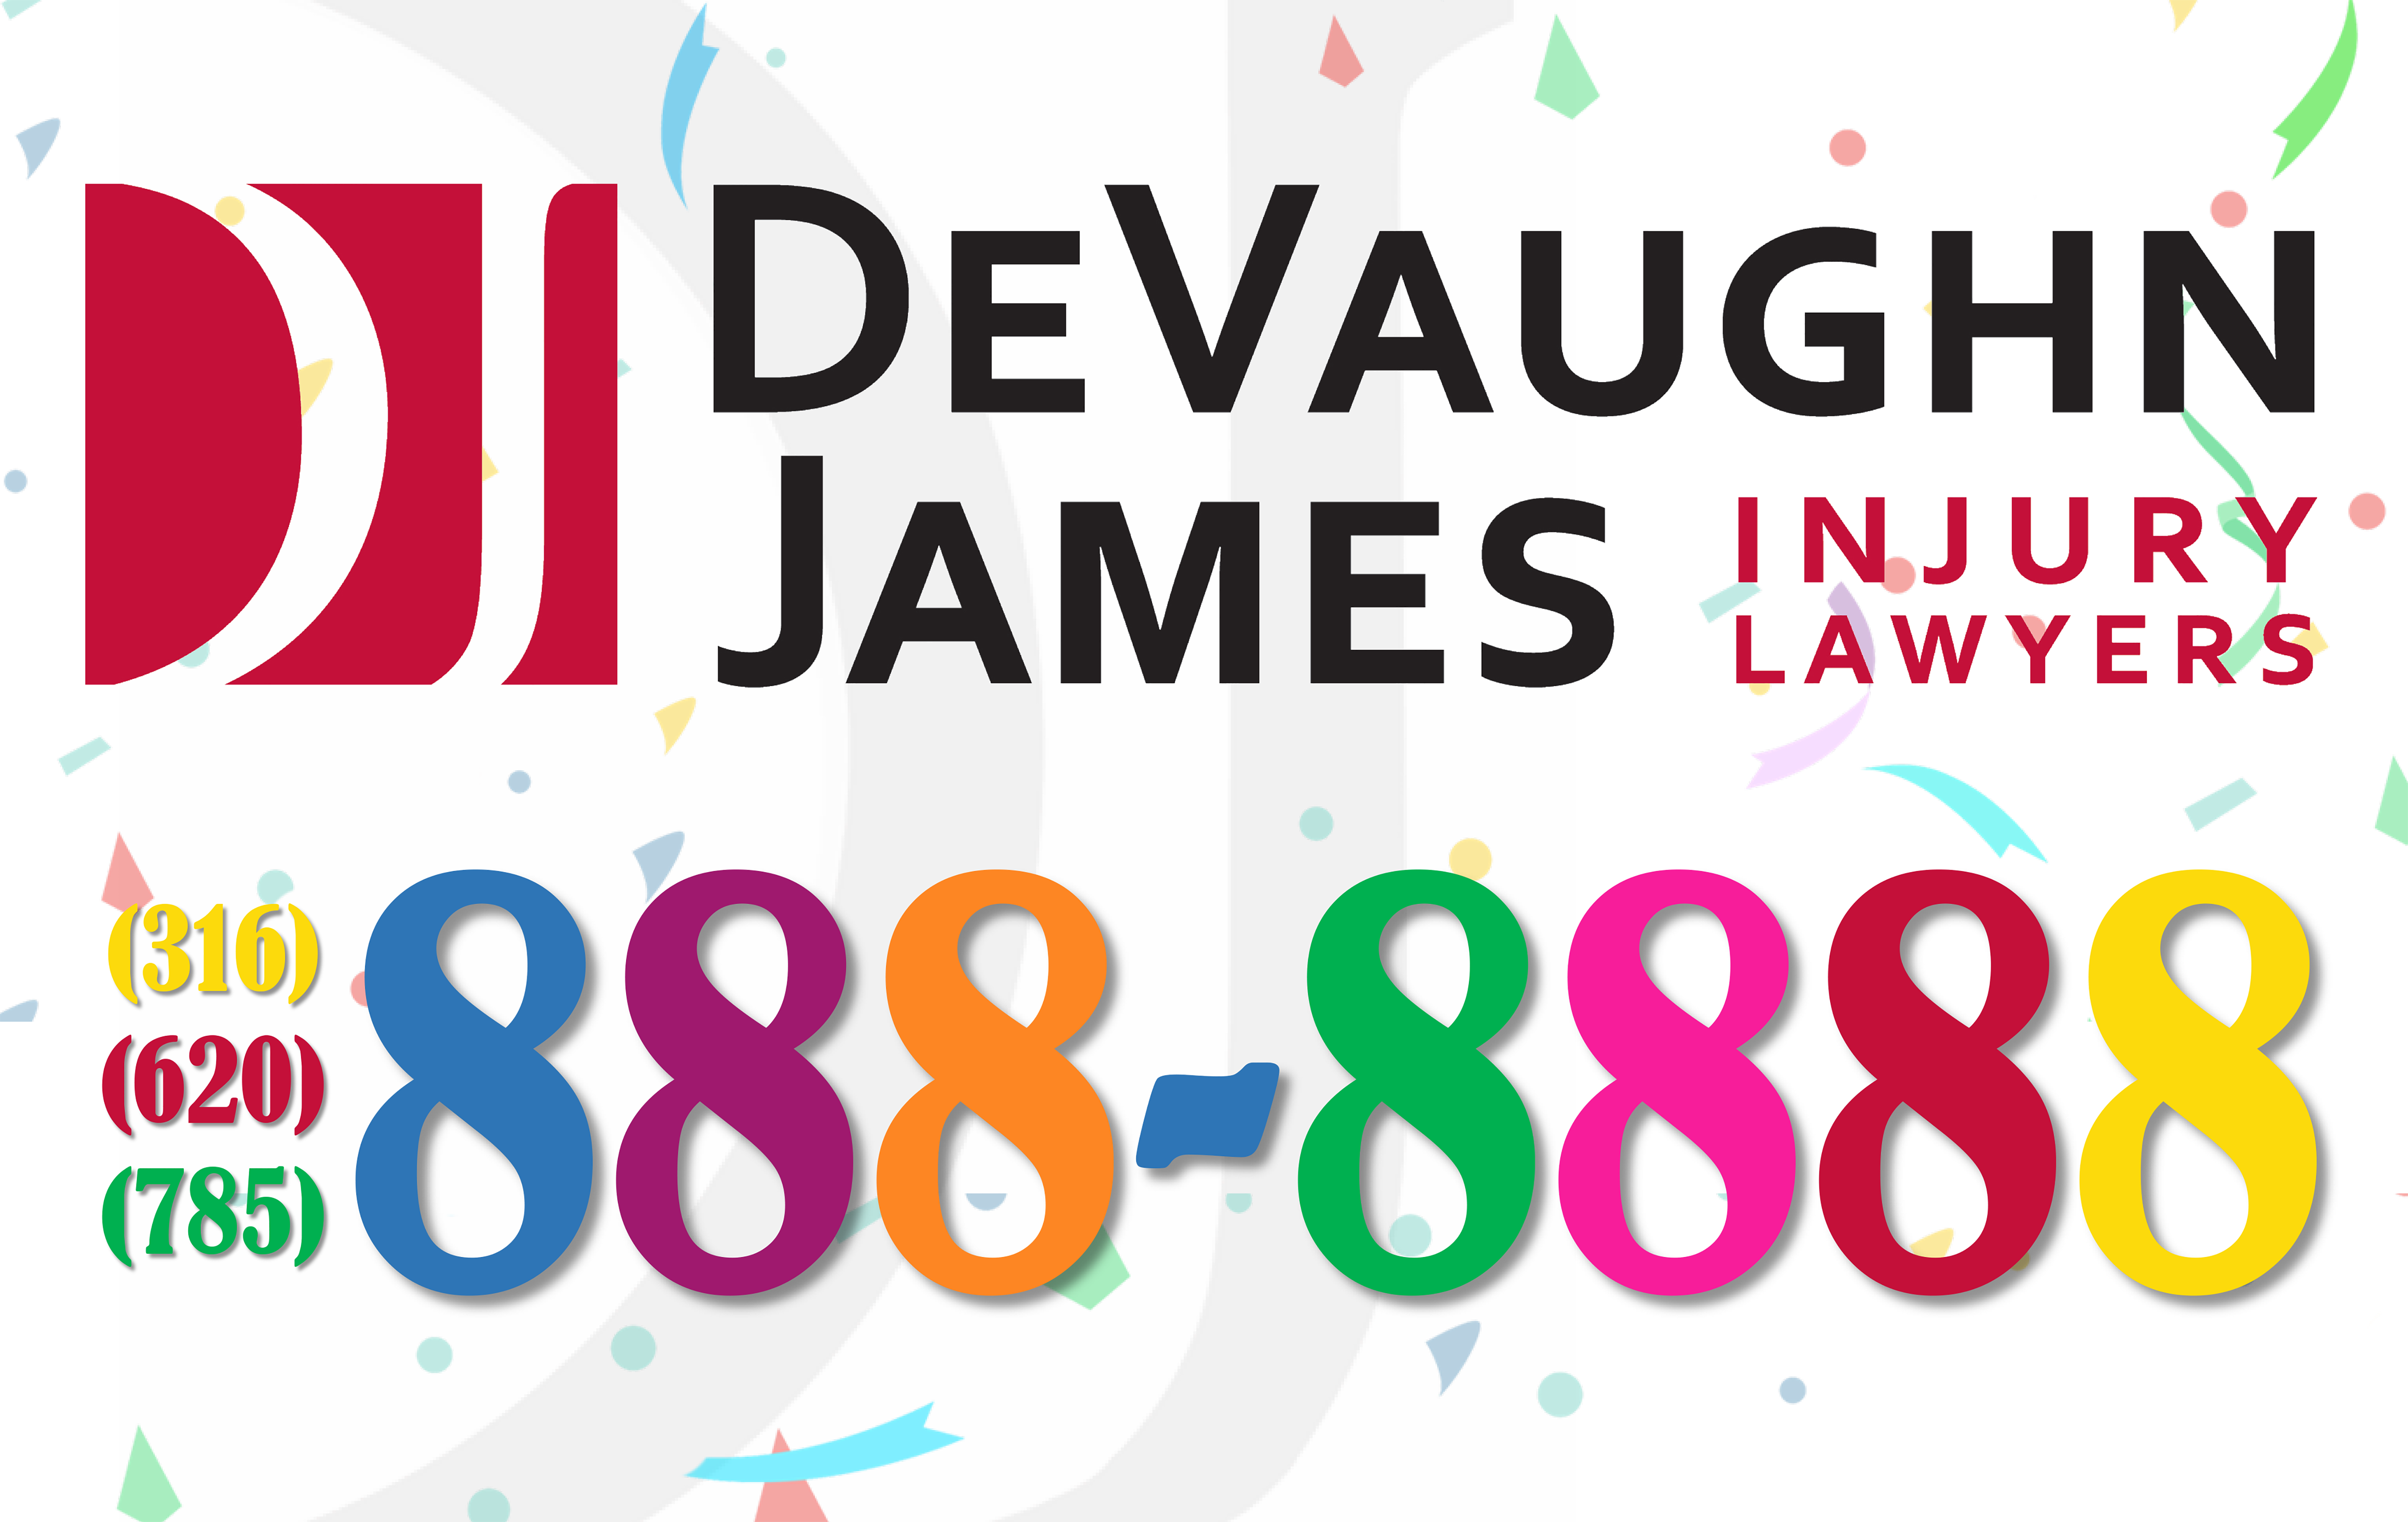 DeVaughn James Injury Lawyers - 888-8888